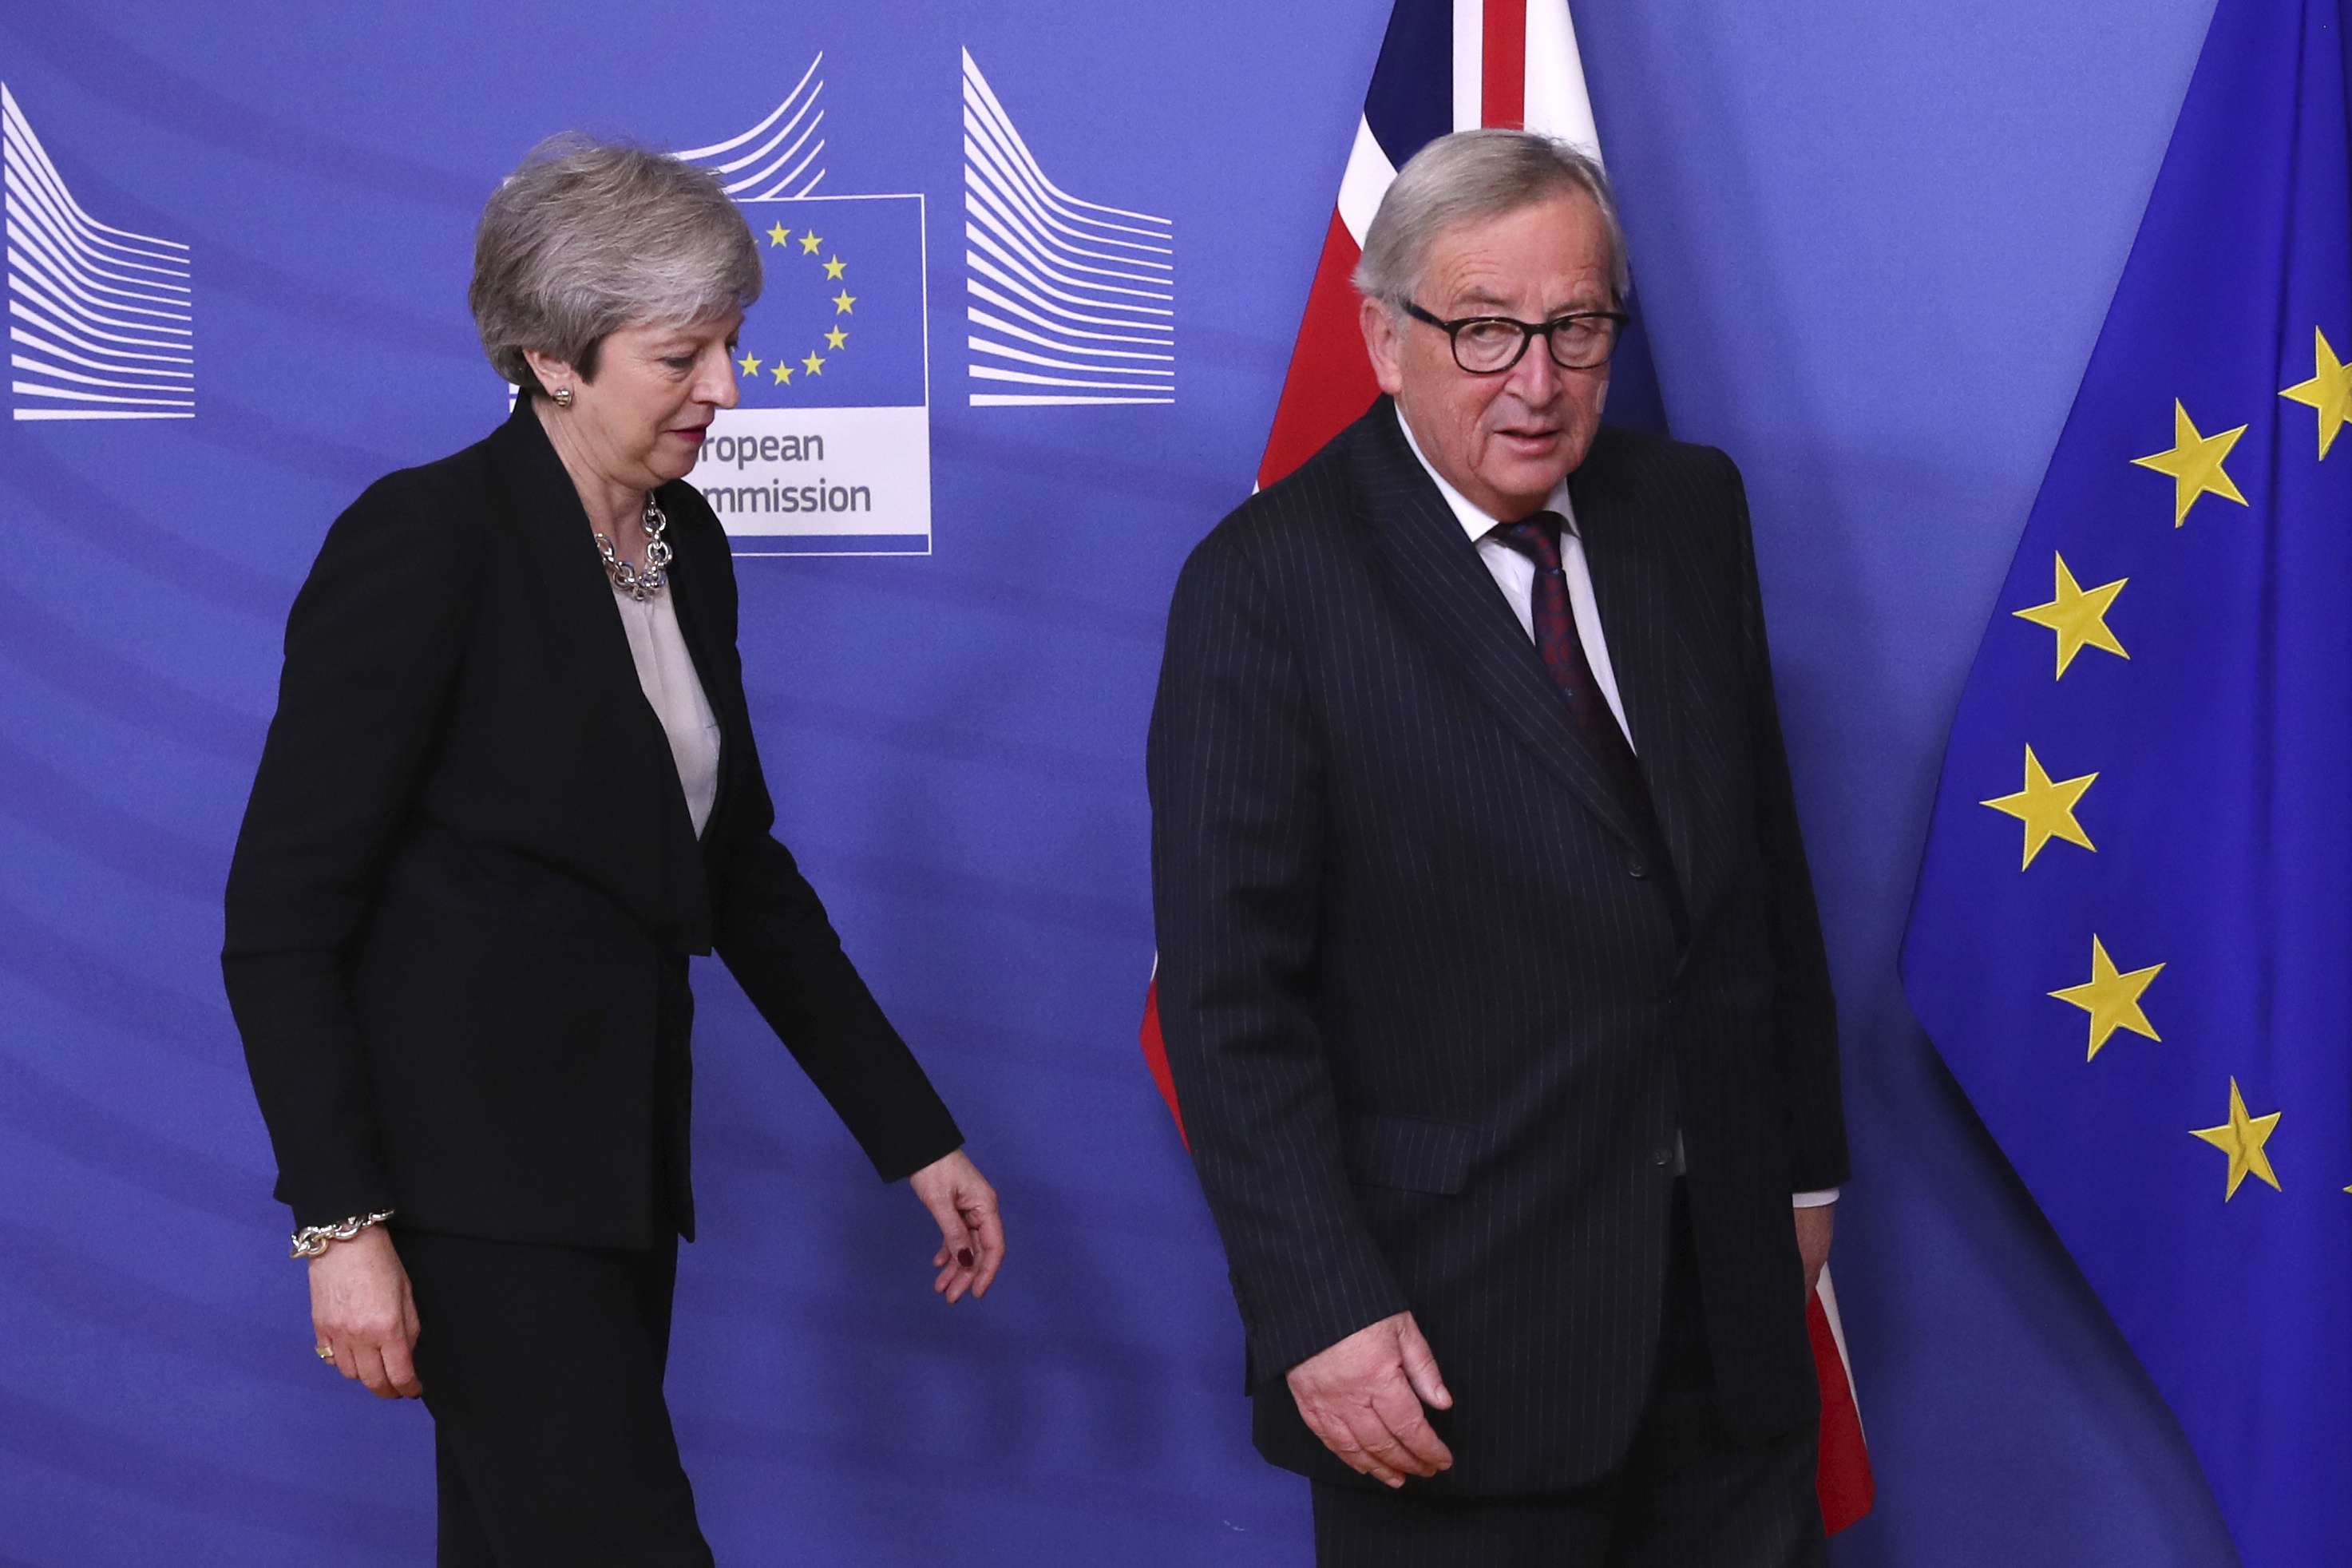 May has face-to-face talks planned with European Council president Donald Tusk, Germany's Angela Merkel and Irish Prime Minister Leo Varadkar